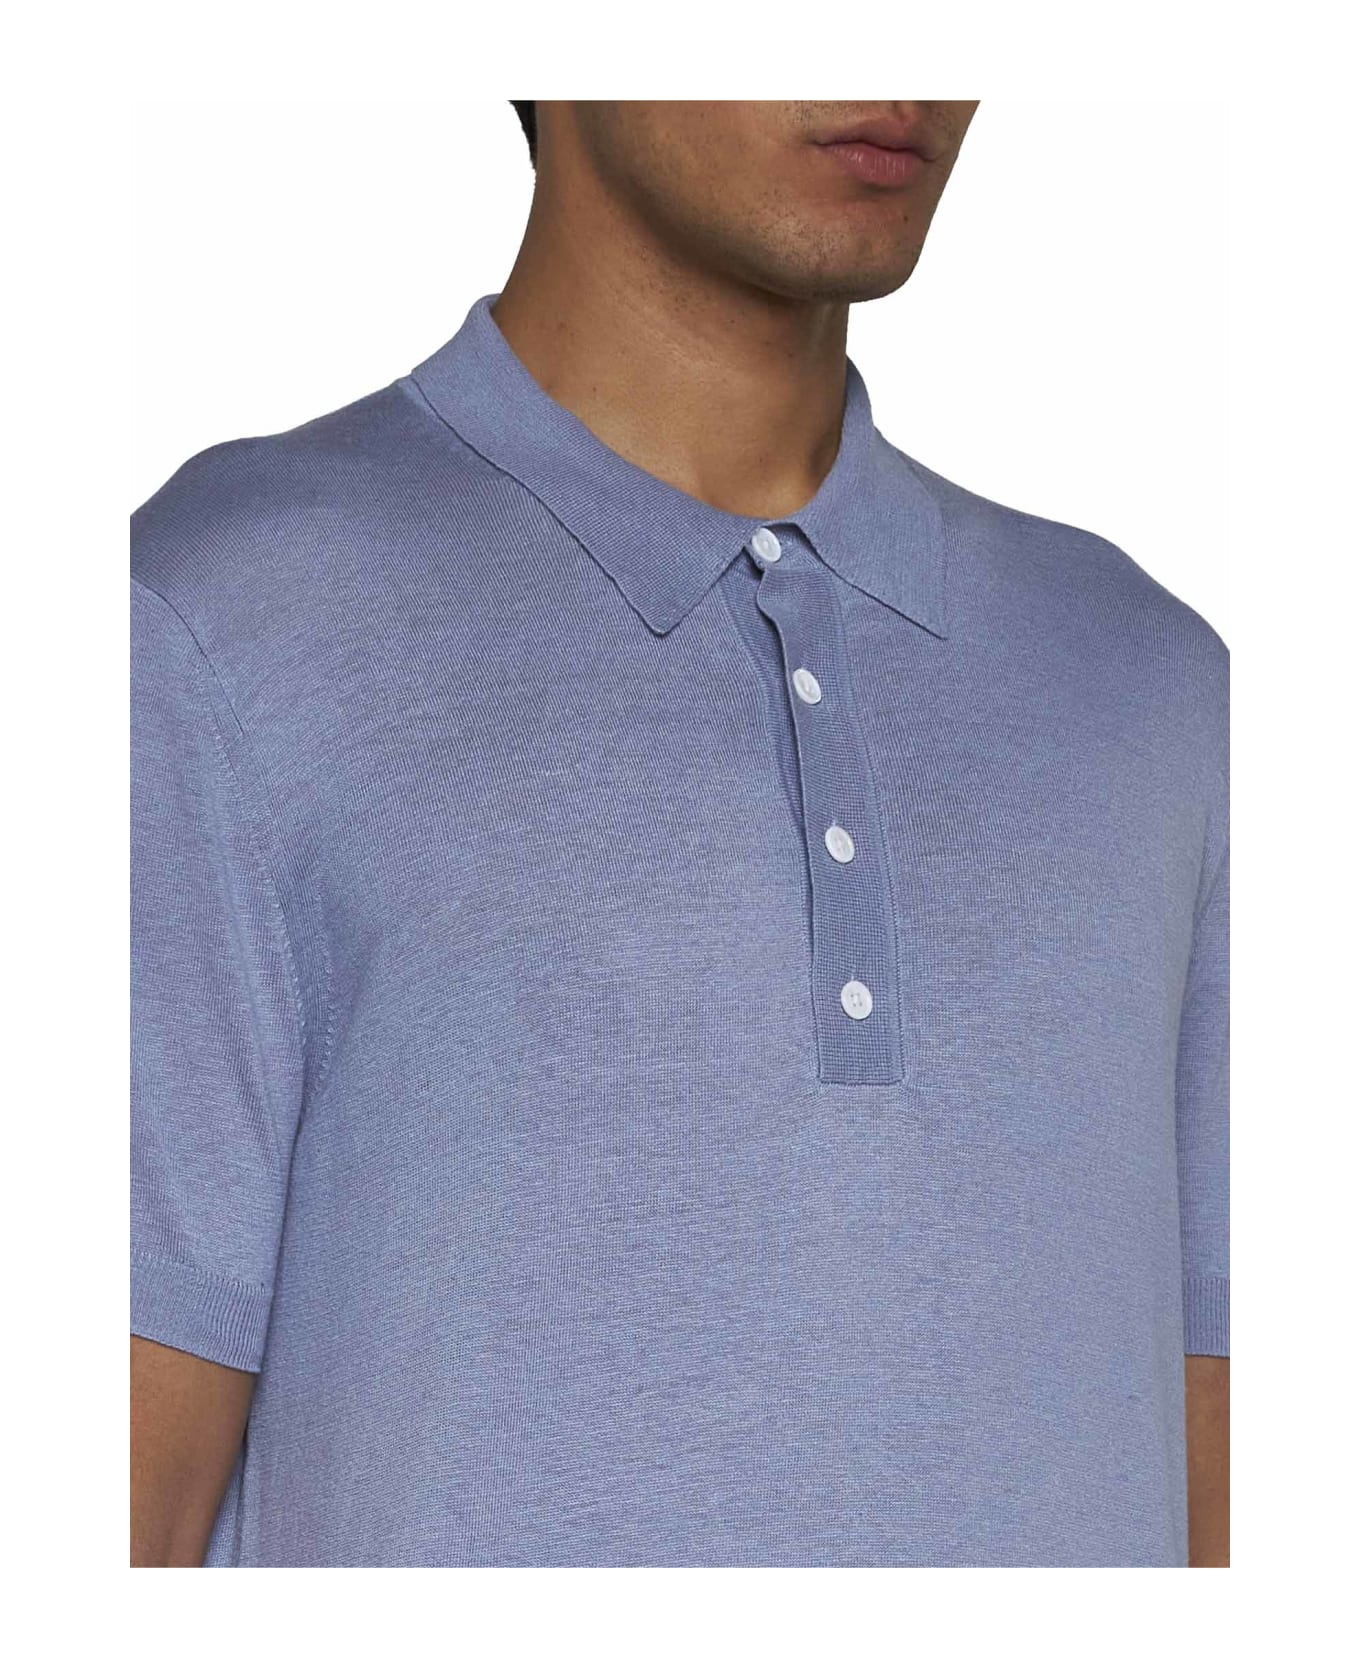 Low Brand Polo Shirt - Lavander